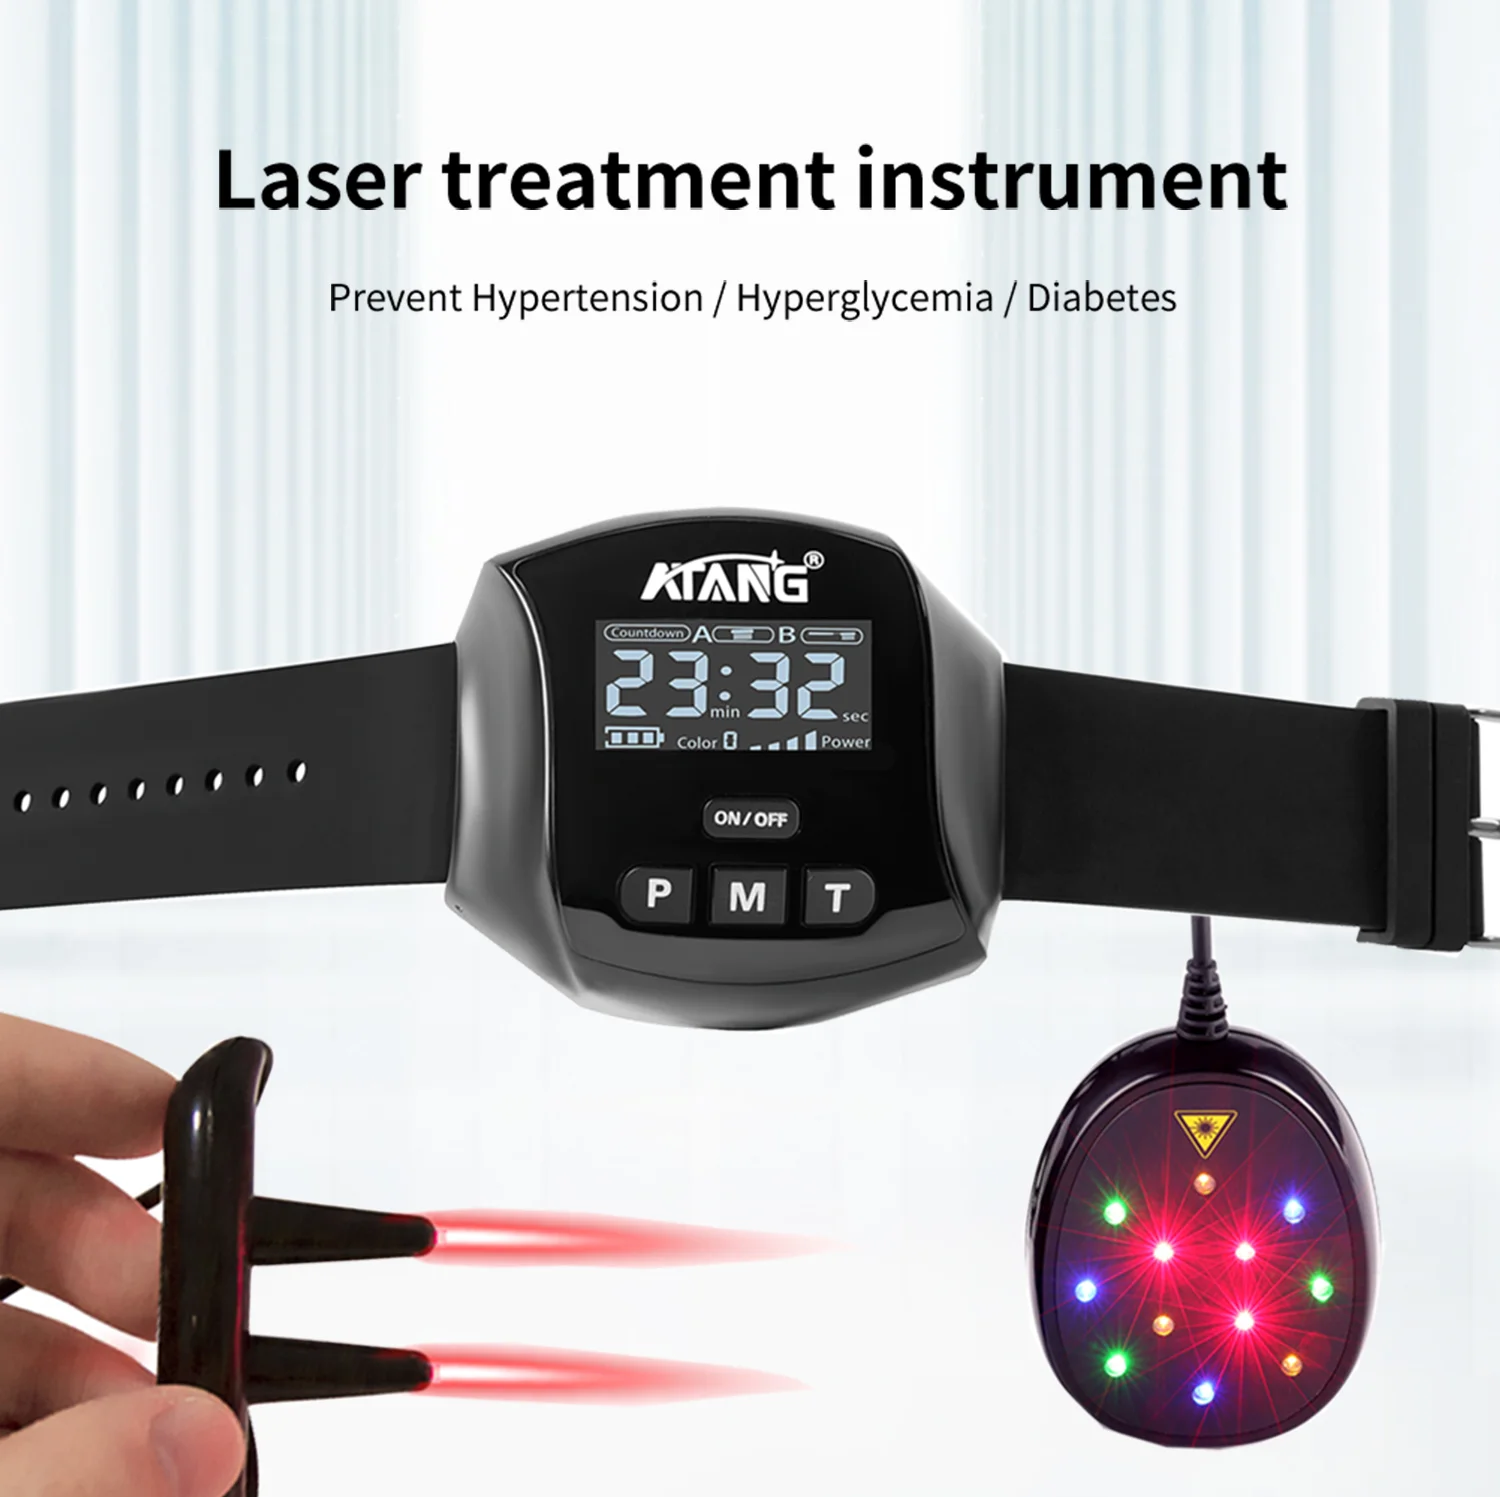 

Cold Laser Watch Blood Irradiation Home Use 650nm Laser Watch Hypertension Ailment Clean up vascular debris